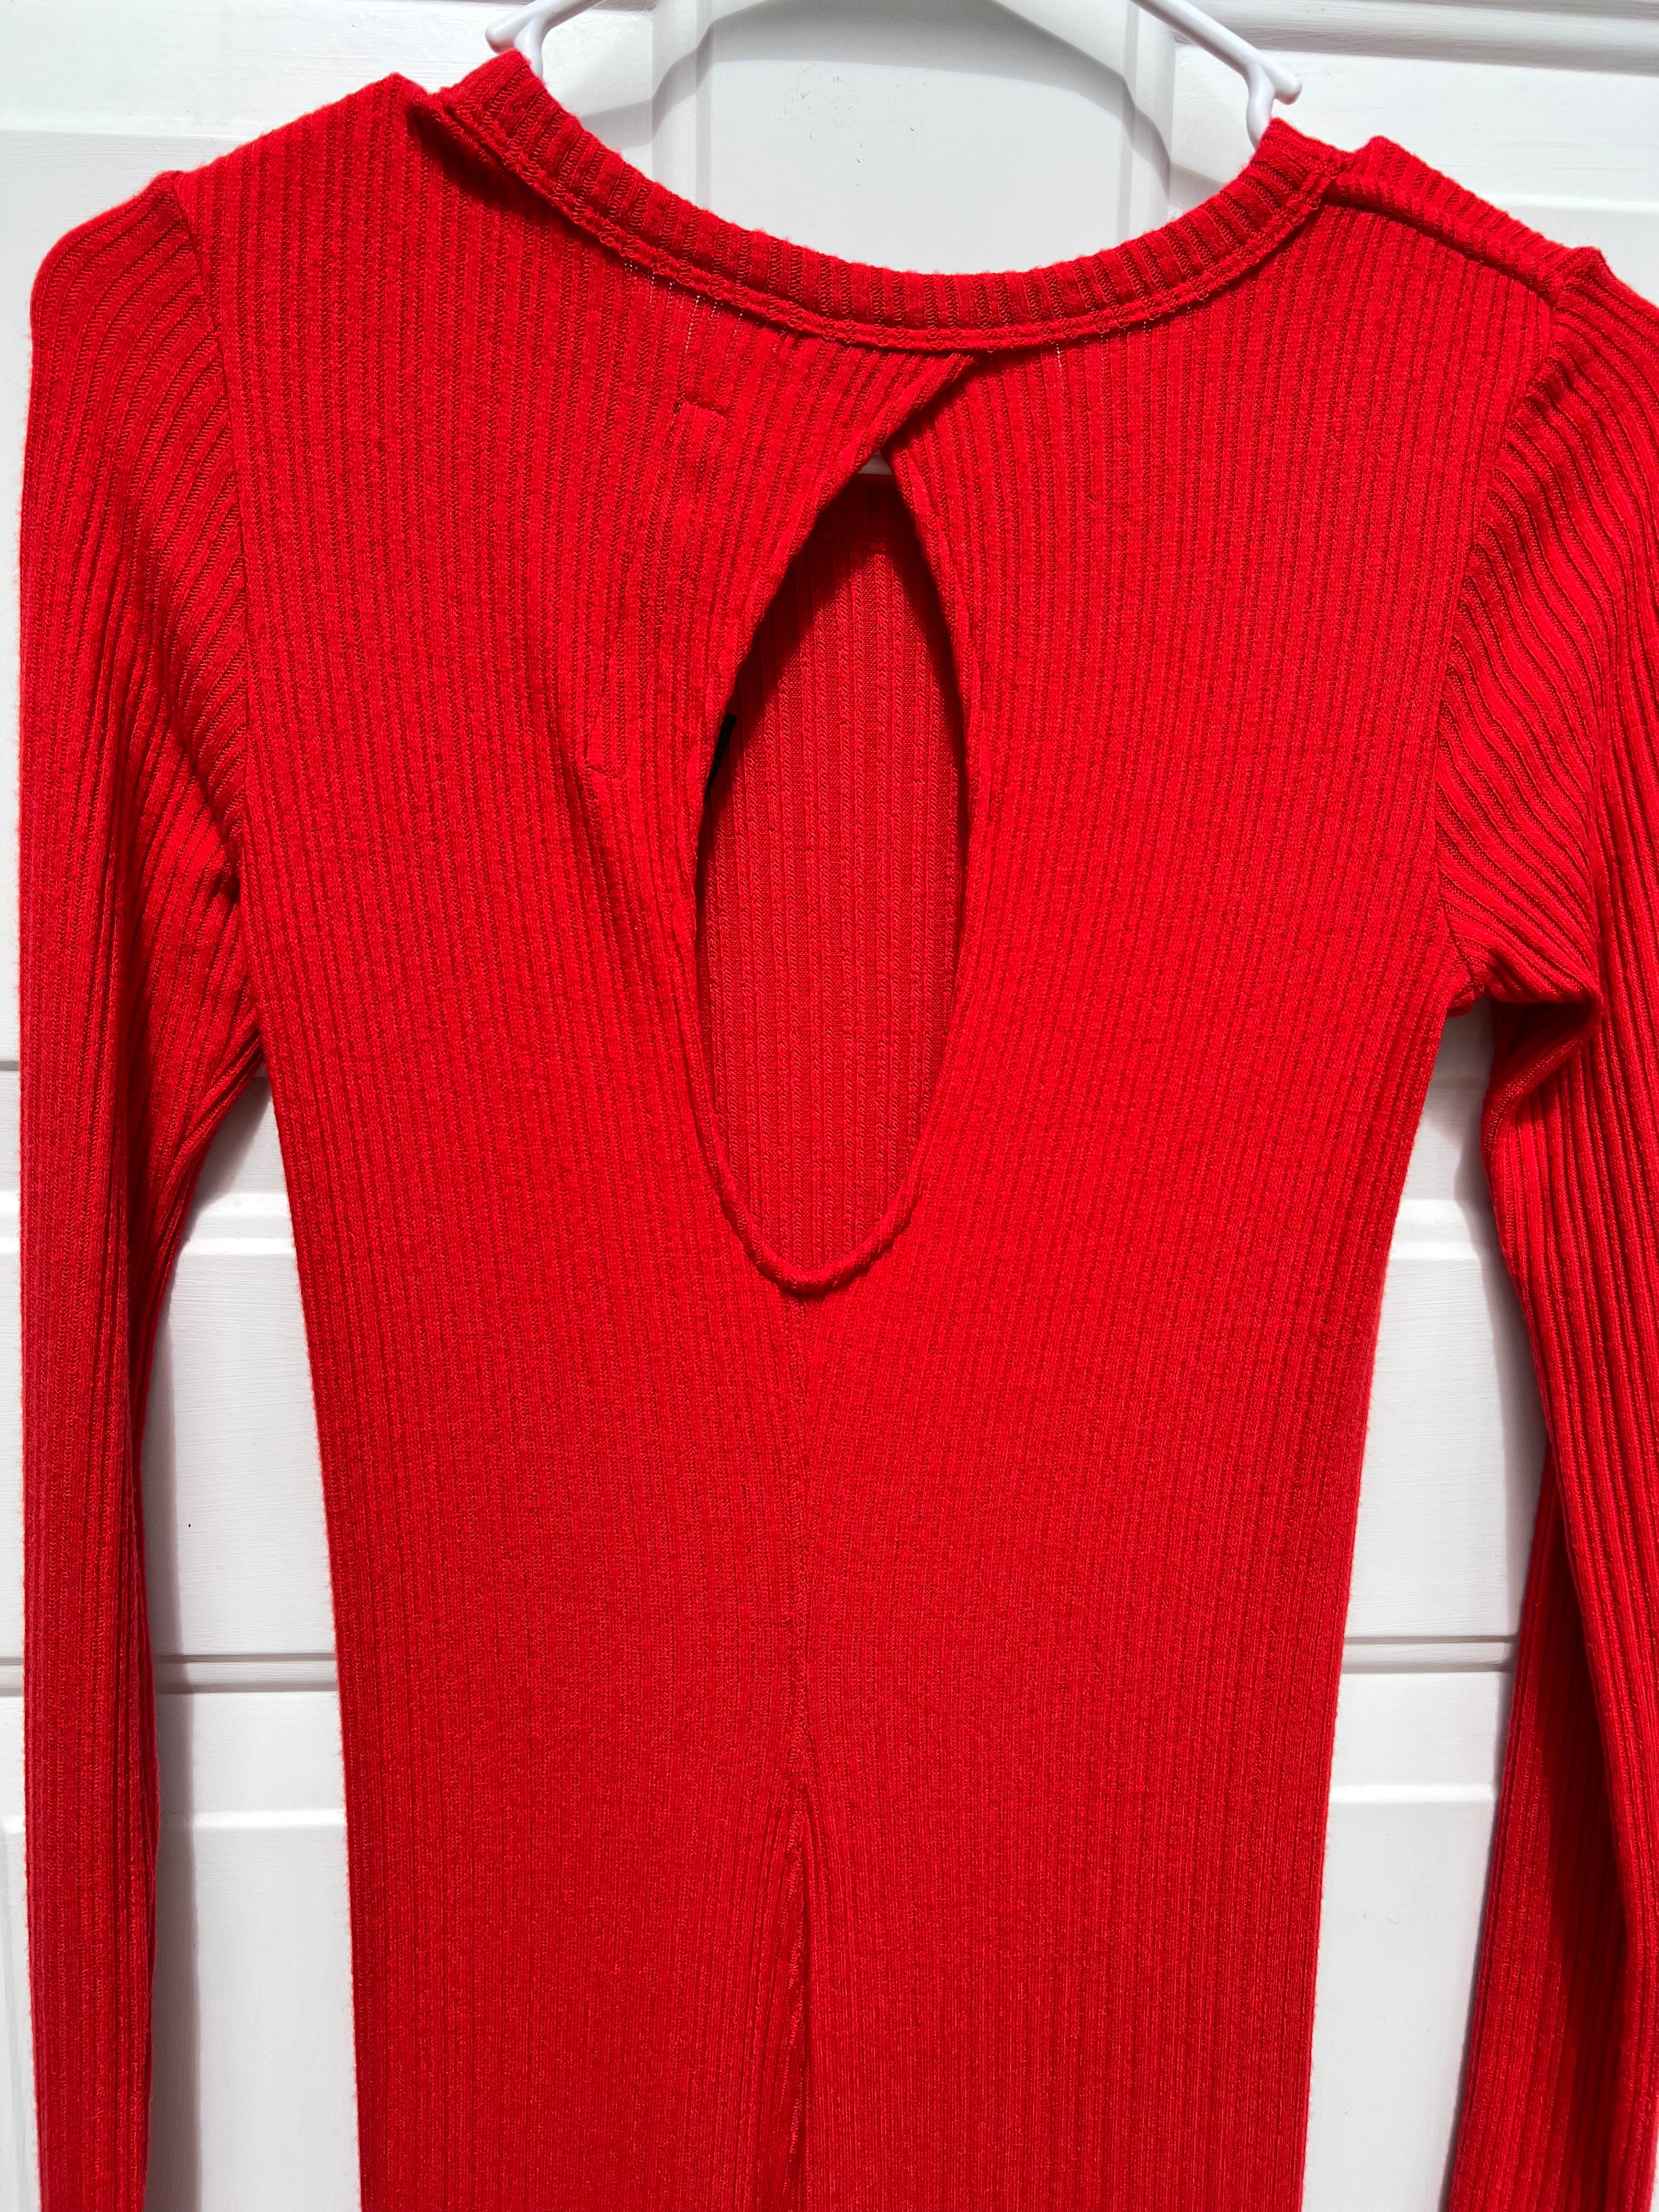 NWT Emma Costa Ling Sleeve Red Rib Midi Dress Size Small